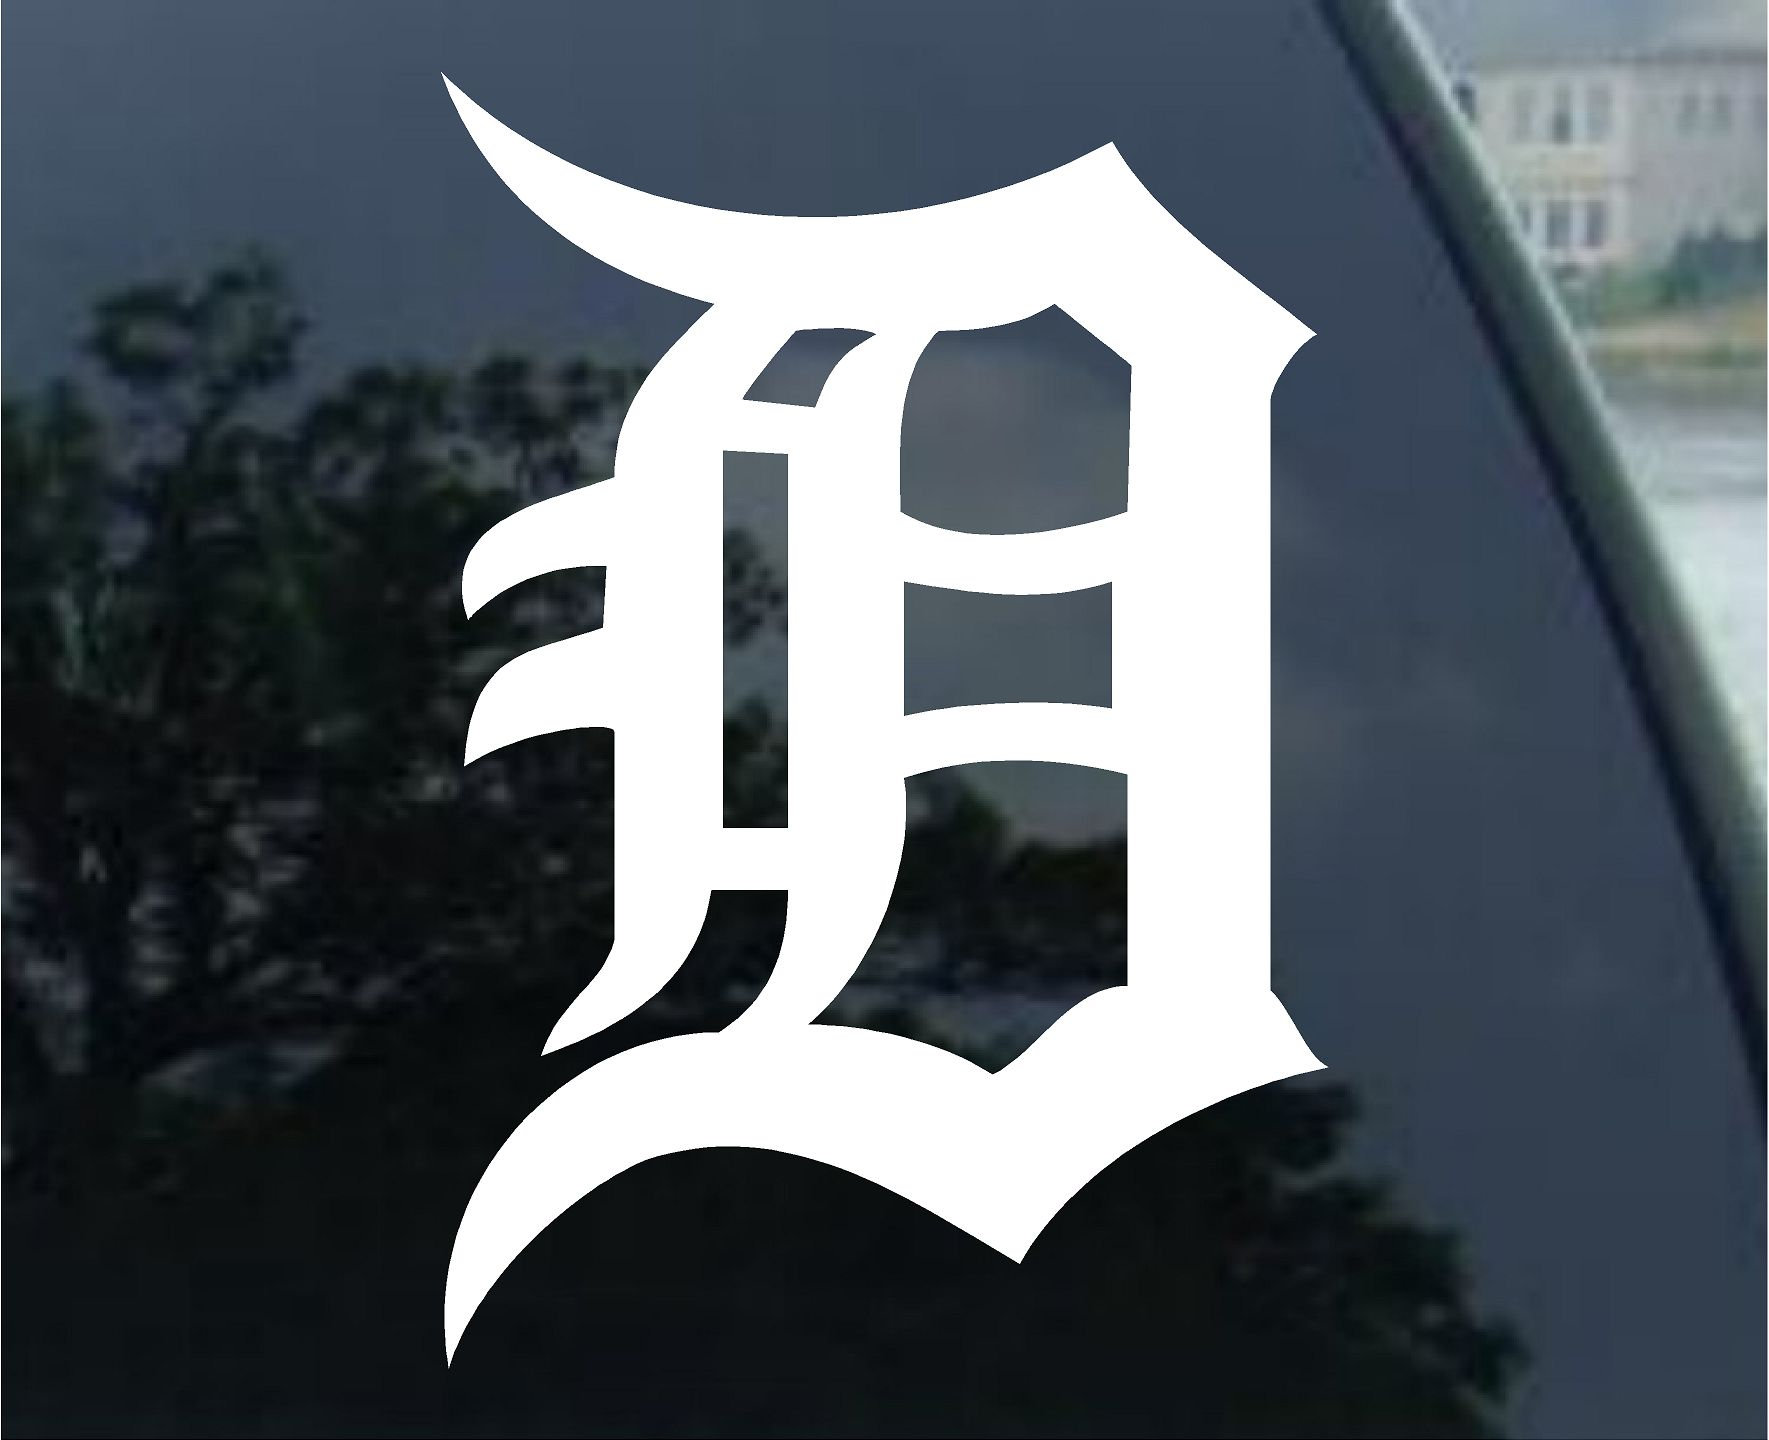 Bundle 38 Files Detroit Tigers Baseball Team Svg, Detroit Ti